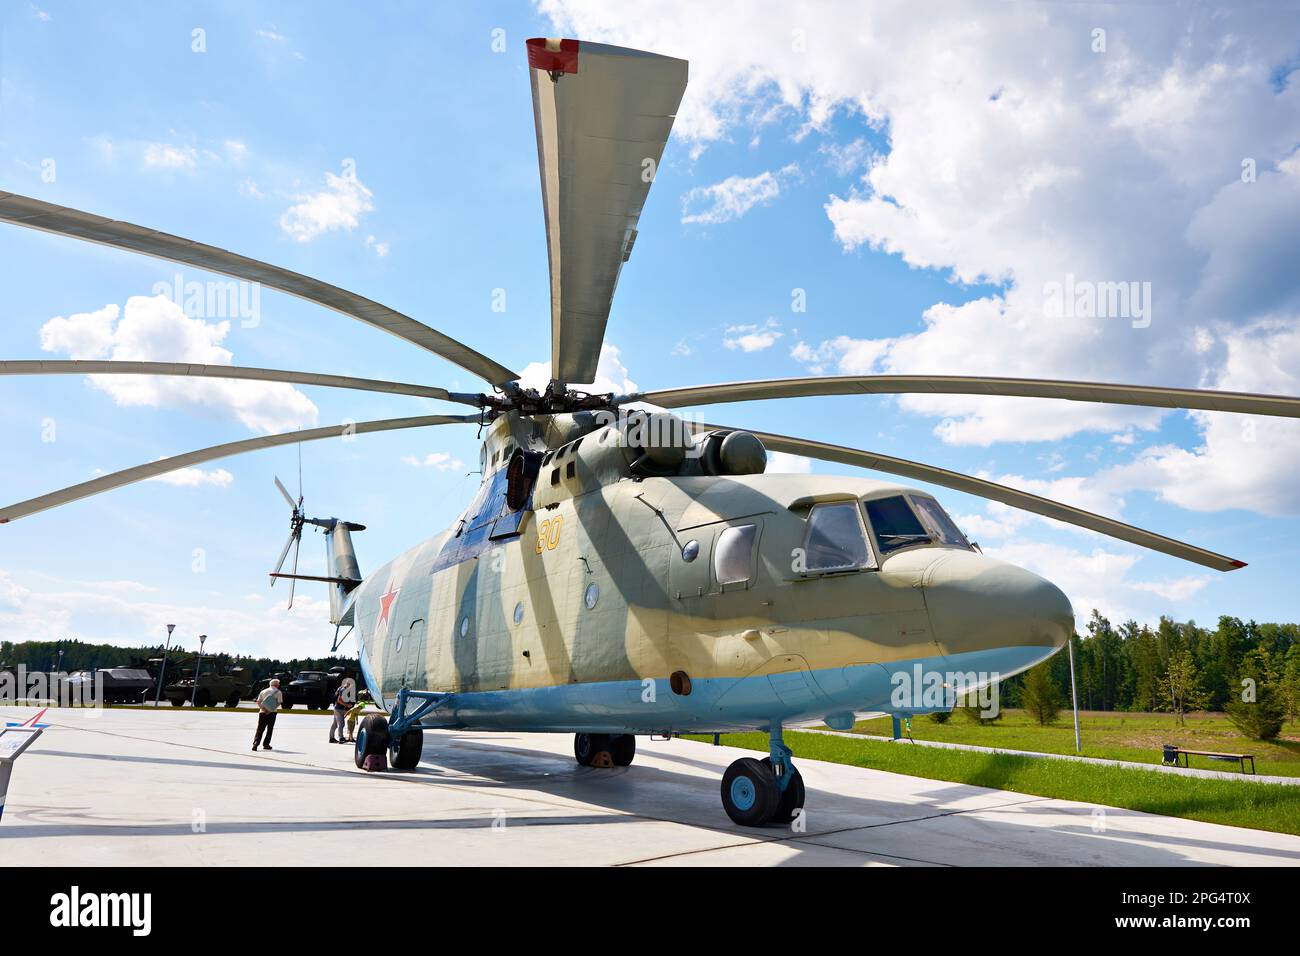 PARK PATRIOT, KUBINKA, MOSCOW REGION, RUSSIA - July 11, 2017: Mi-26 Russian heavy transport helicopter Stock Photo